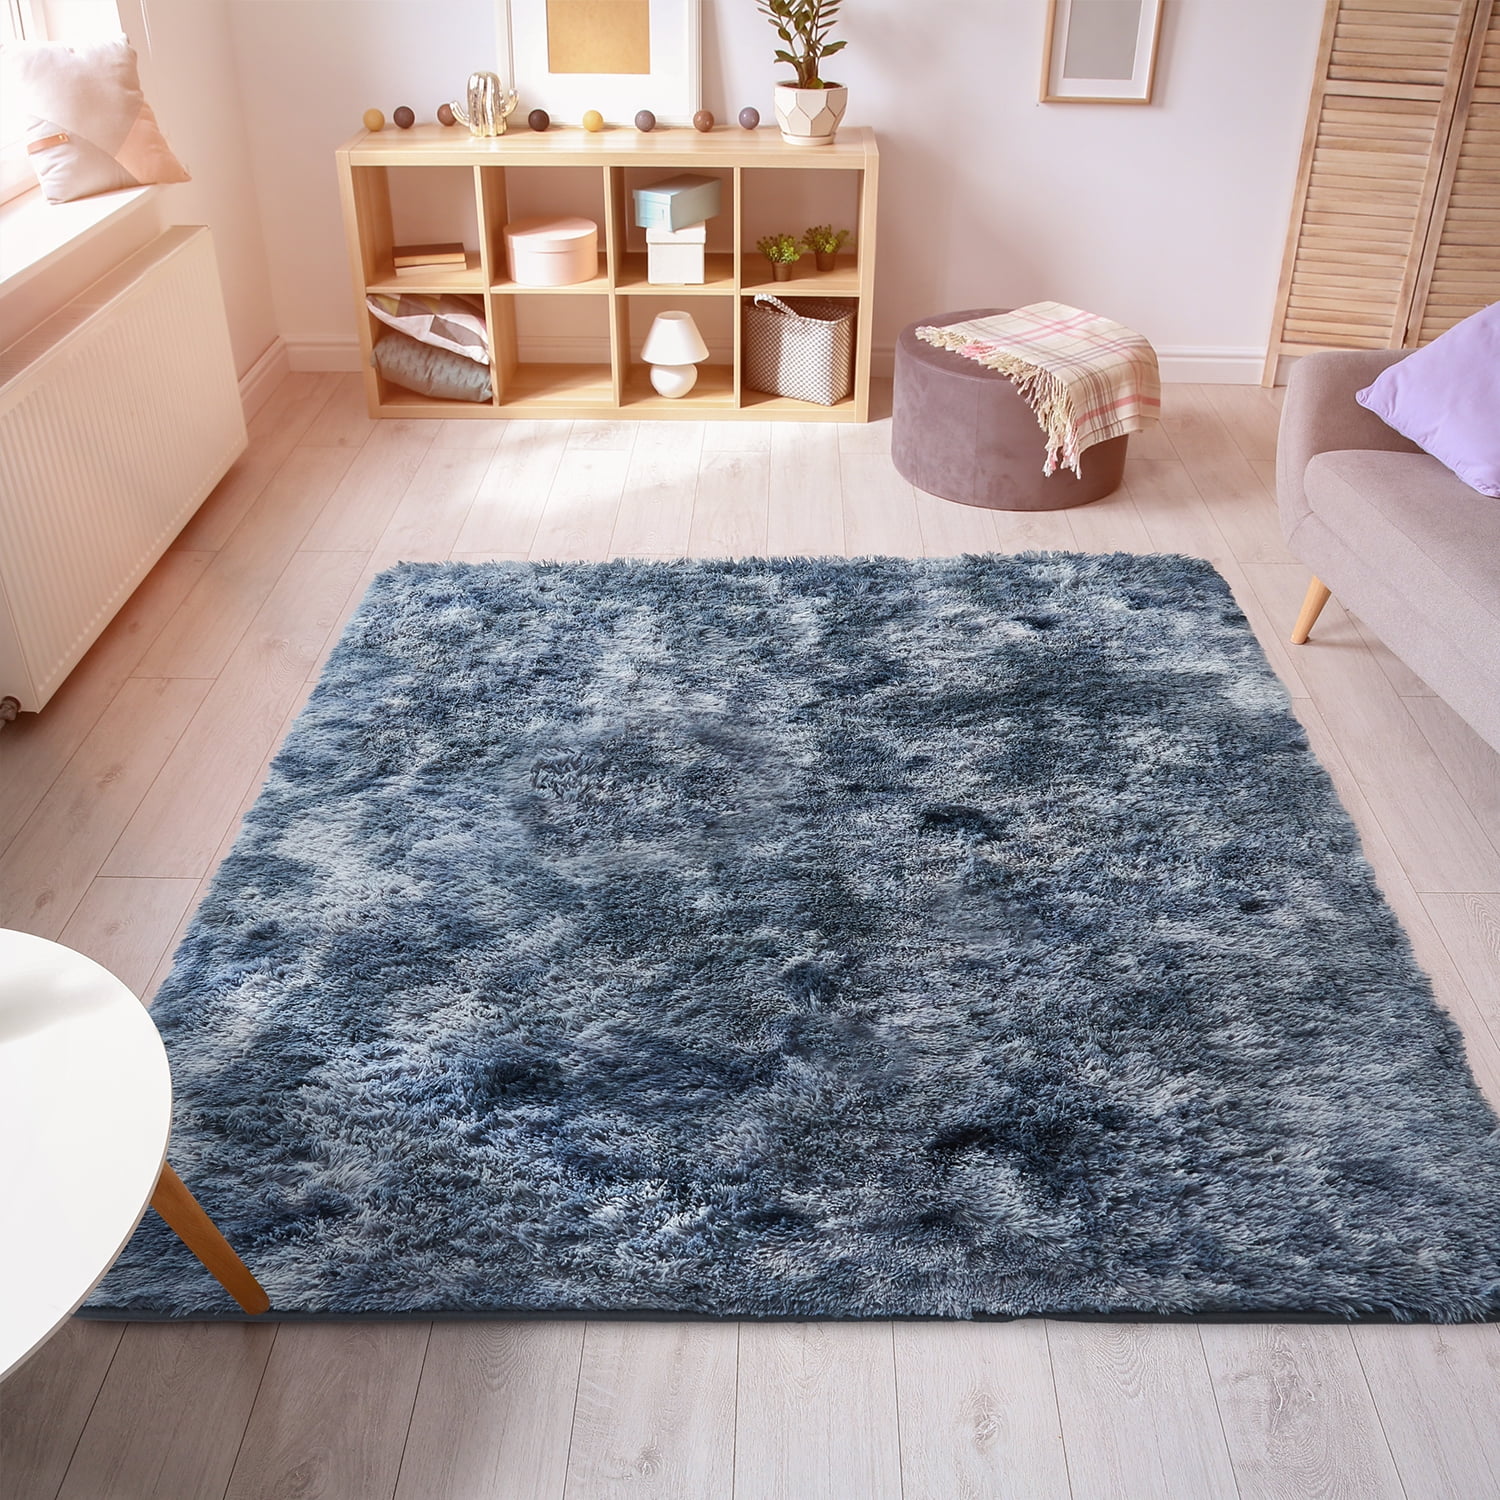 Jelymark Super Soft Shaggy Rug for Bedroom, 4x5.9 Fluffy Carpet for Living Room